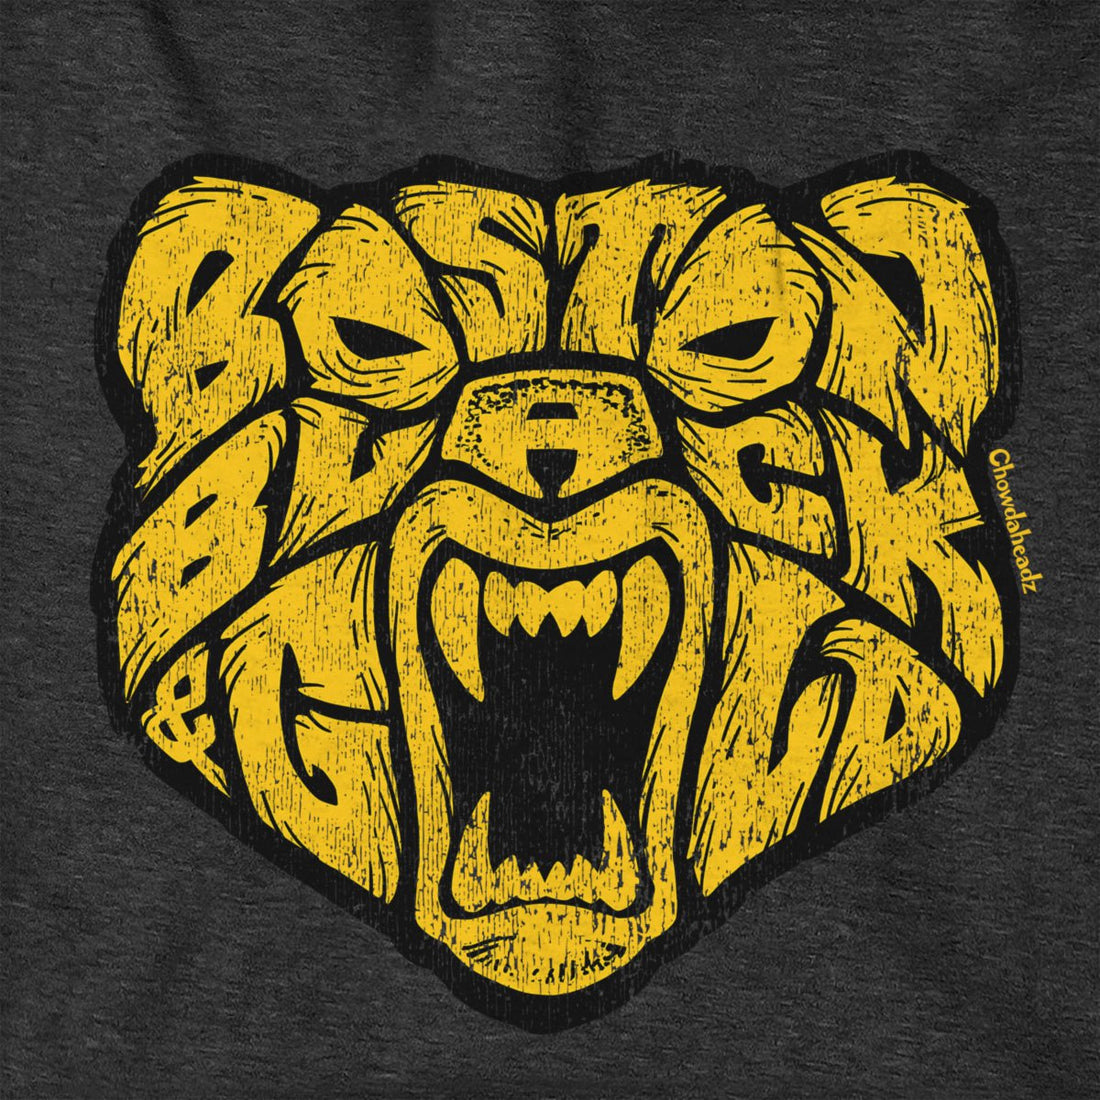 Chowdaheadz-Sweatshirt Bear Hug Boston Hockey Hoodie